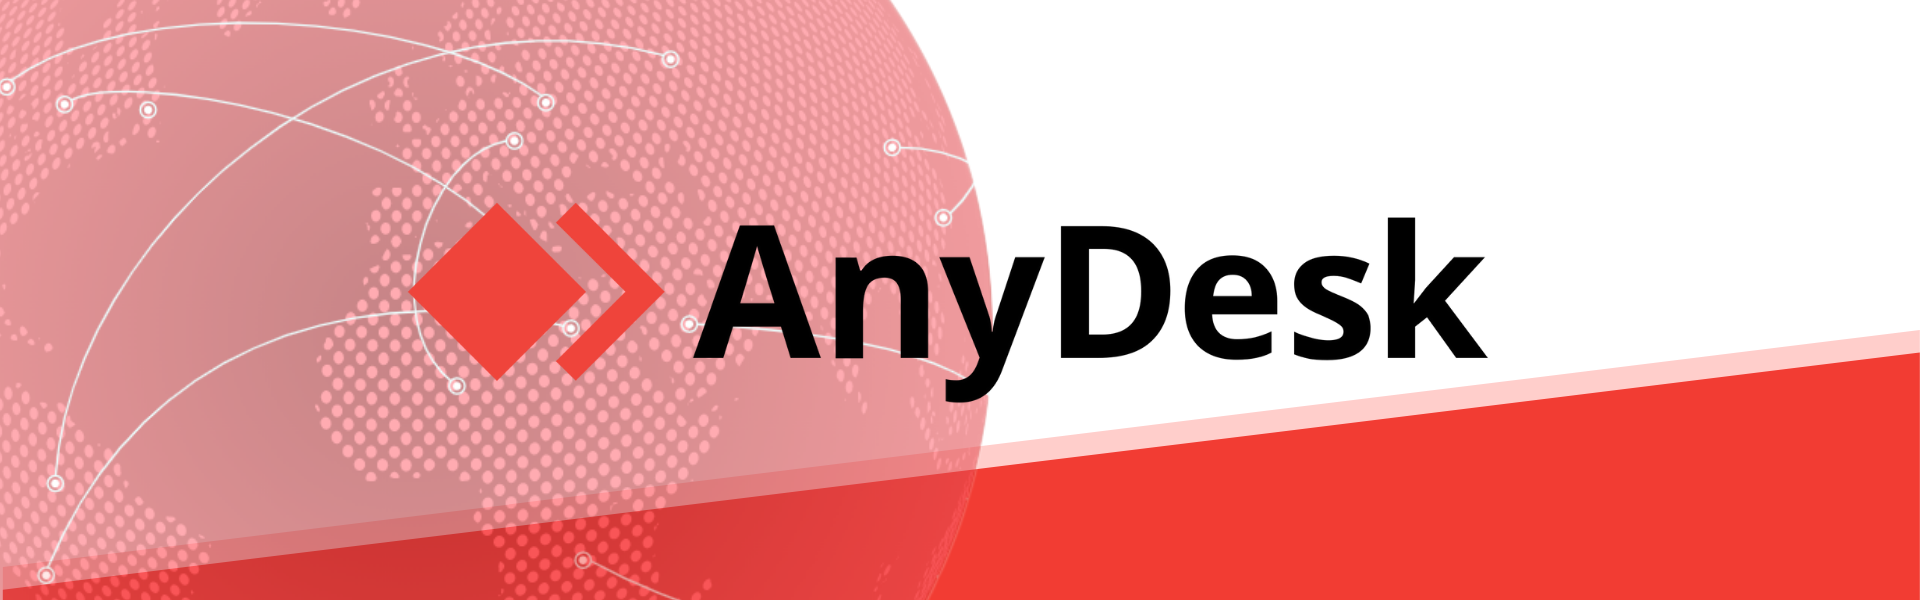 AnyDesk Banner